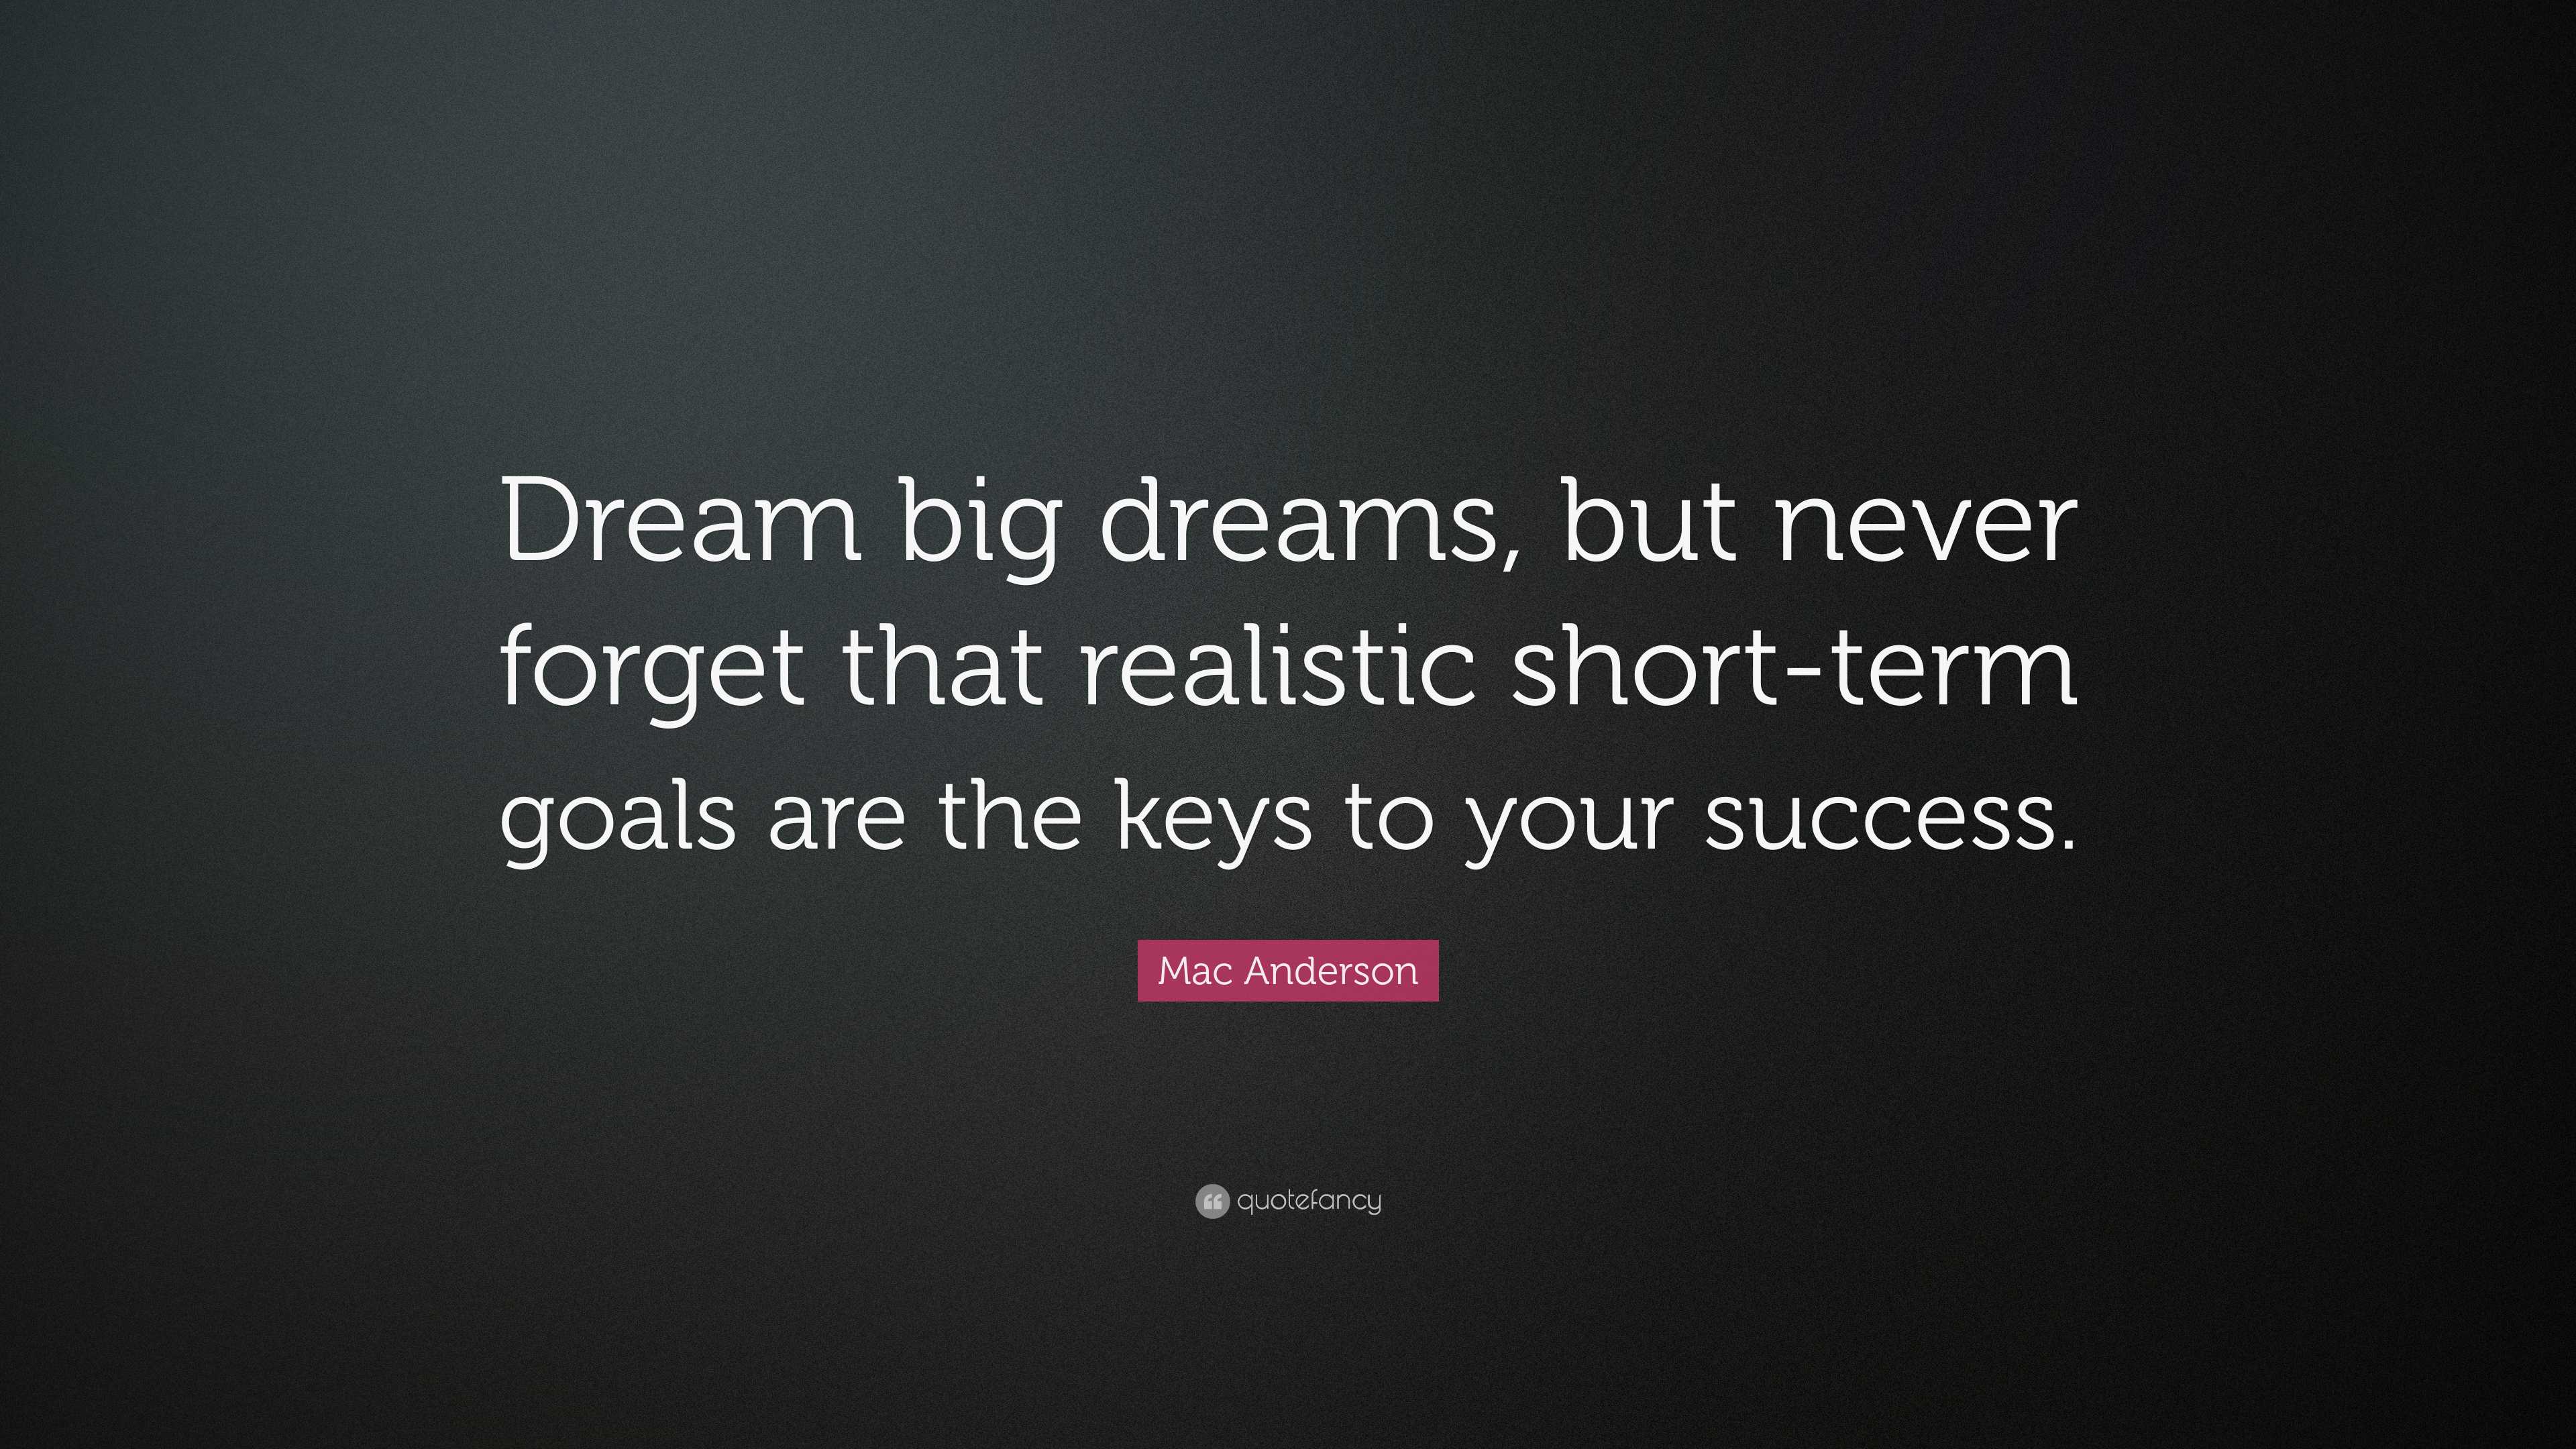 https://quotefancy.com/media/wallpaper/3840x2160/7695910-Mac-Anderson-Quote-Dream-big-dreams-but-never-forget-that.jpg